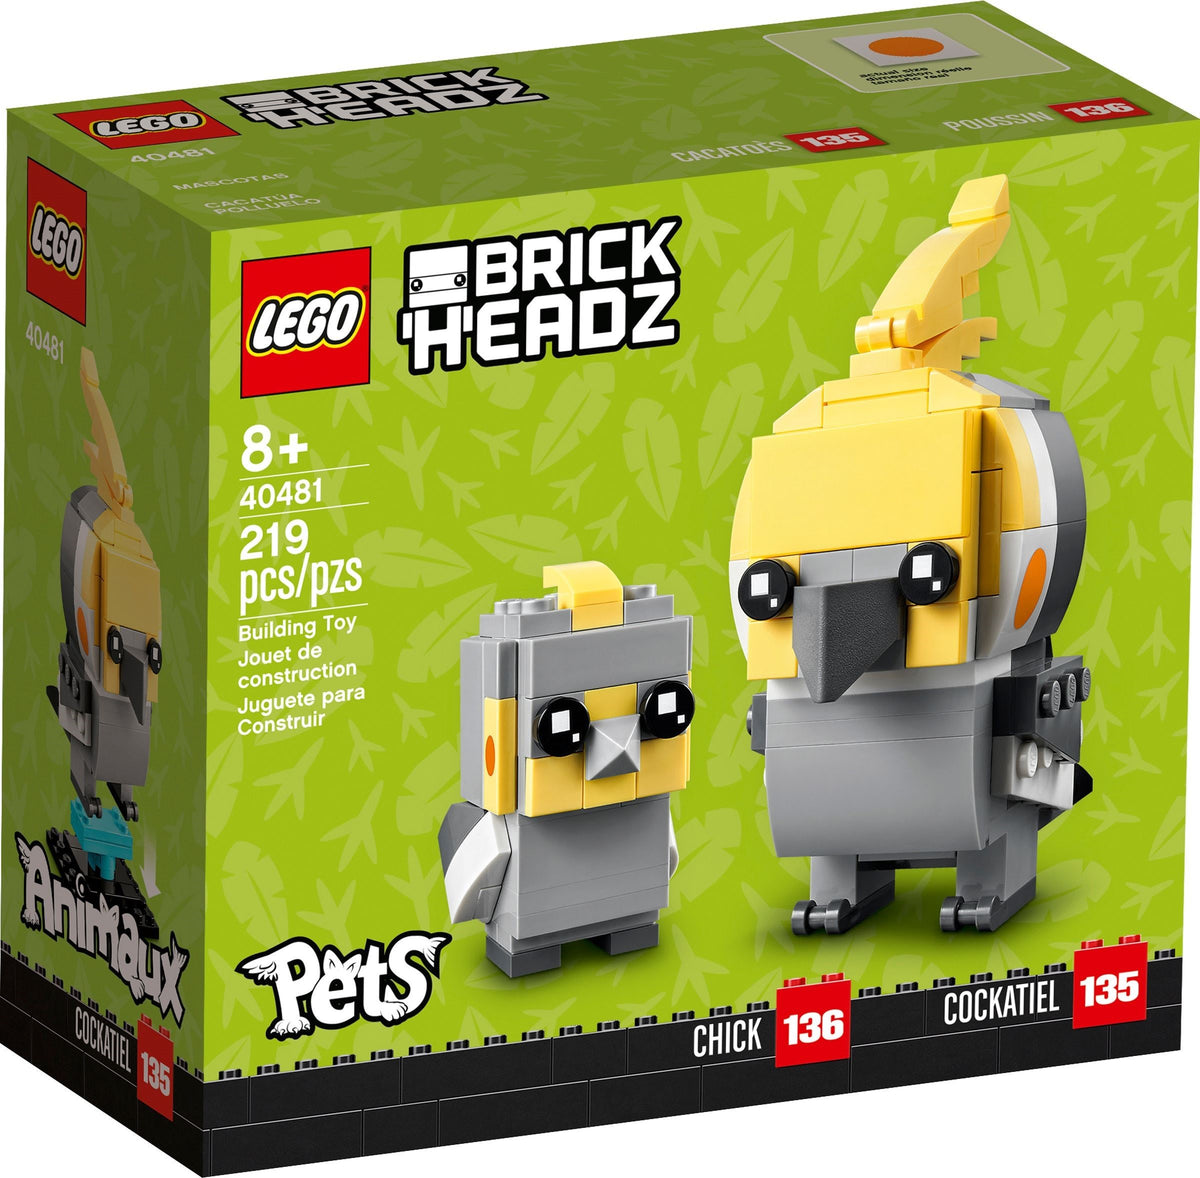 LEGO BrickHeadz Pets 40481 Nymphensittich